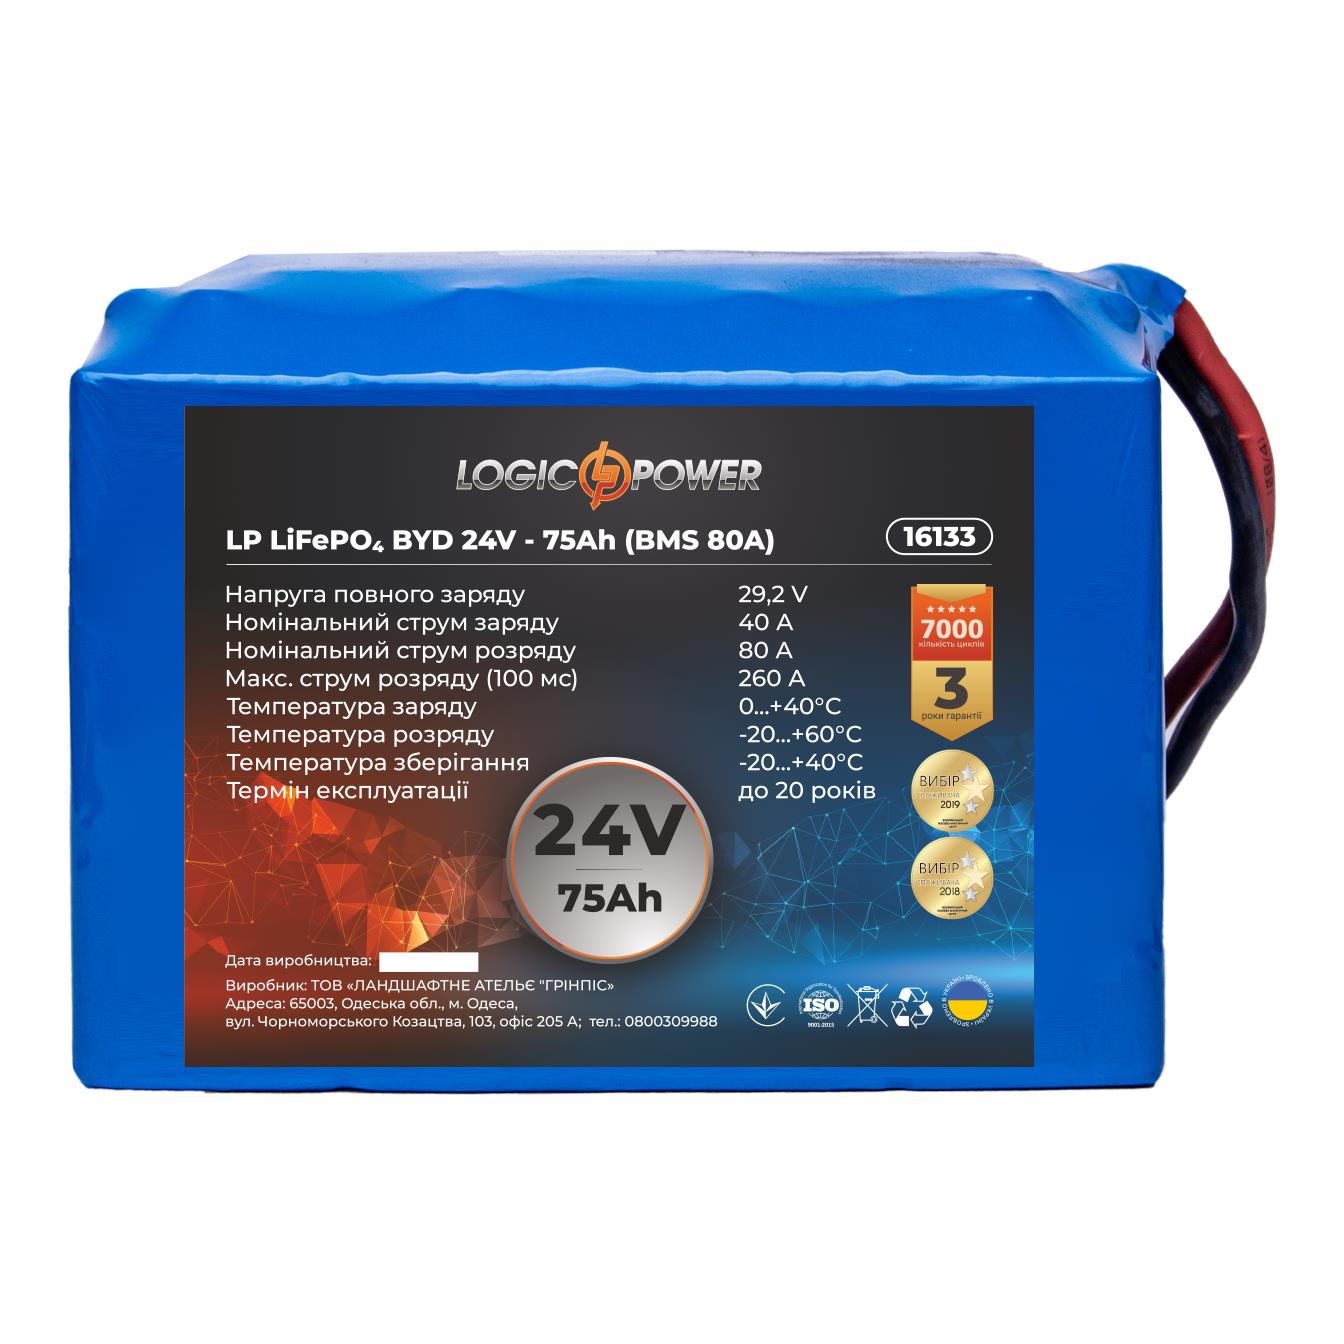 Аккумулятор литий-железо-фосфатный LogicPower LP LiFePO4 BYD 24V - 75 Ah (BMS 80A) (16133)